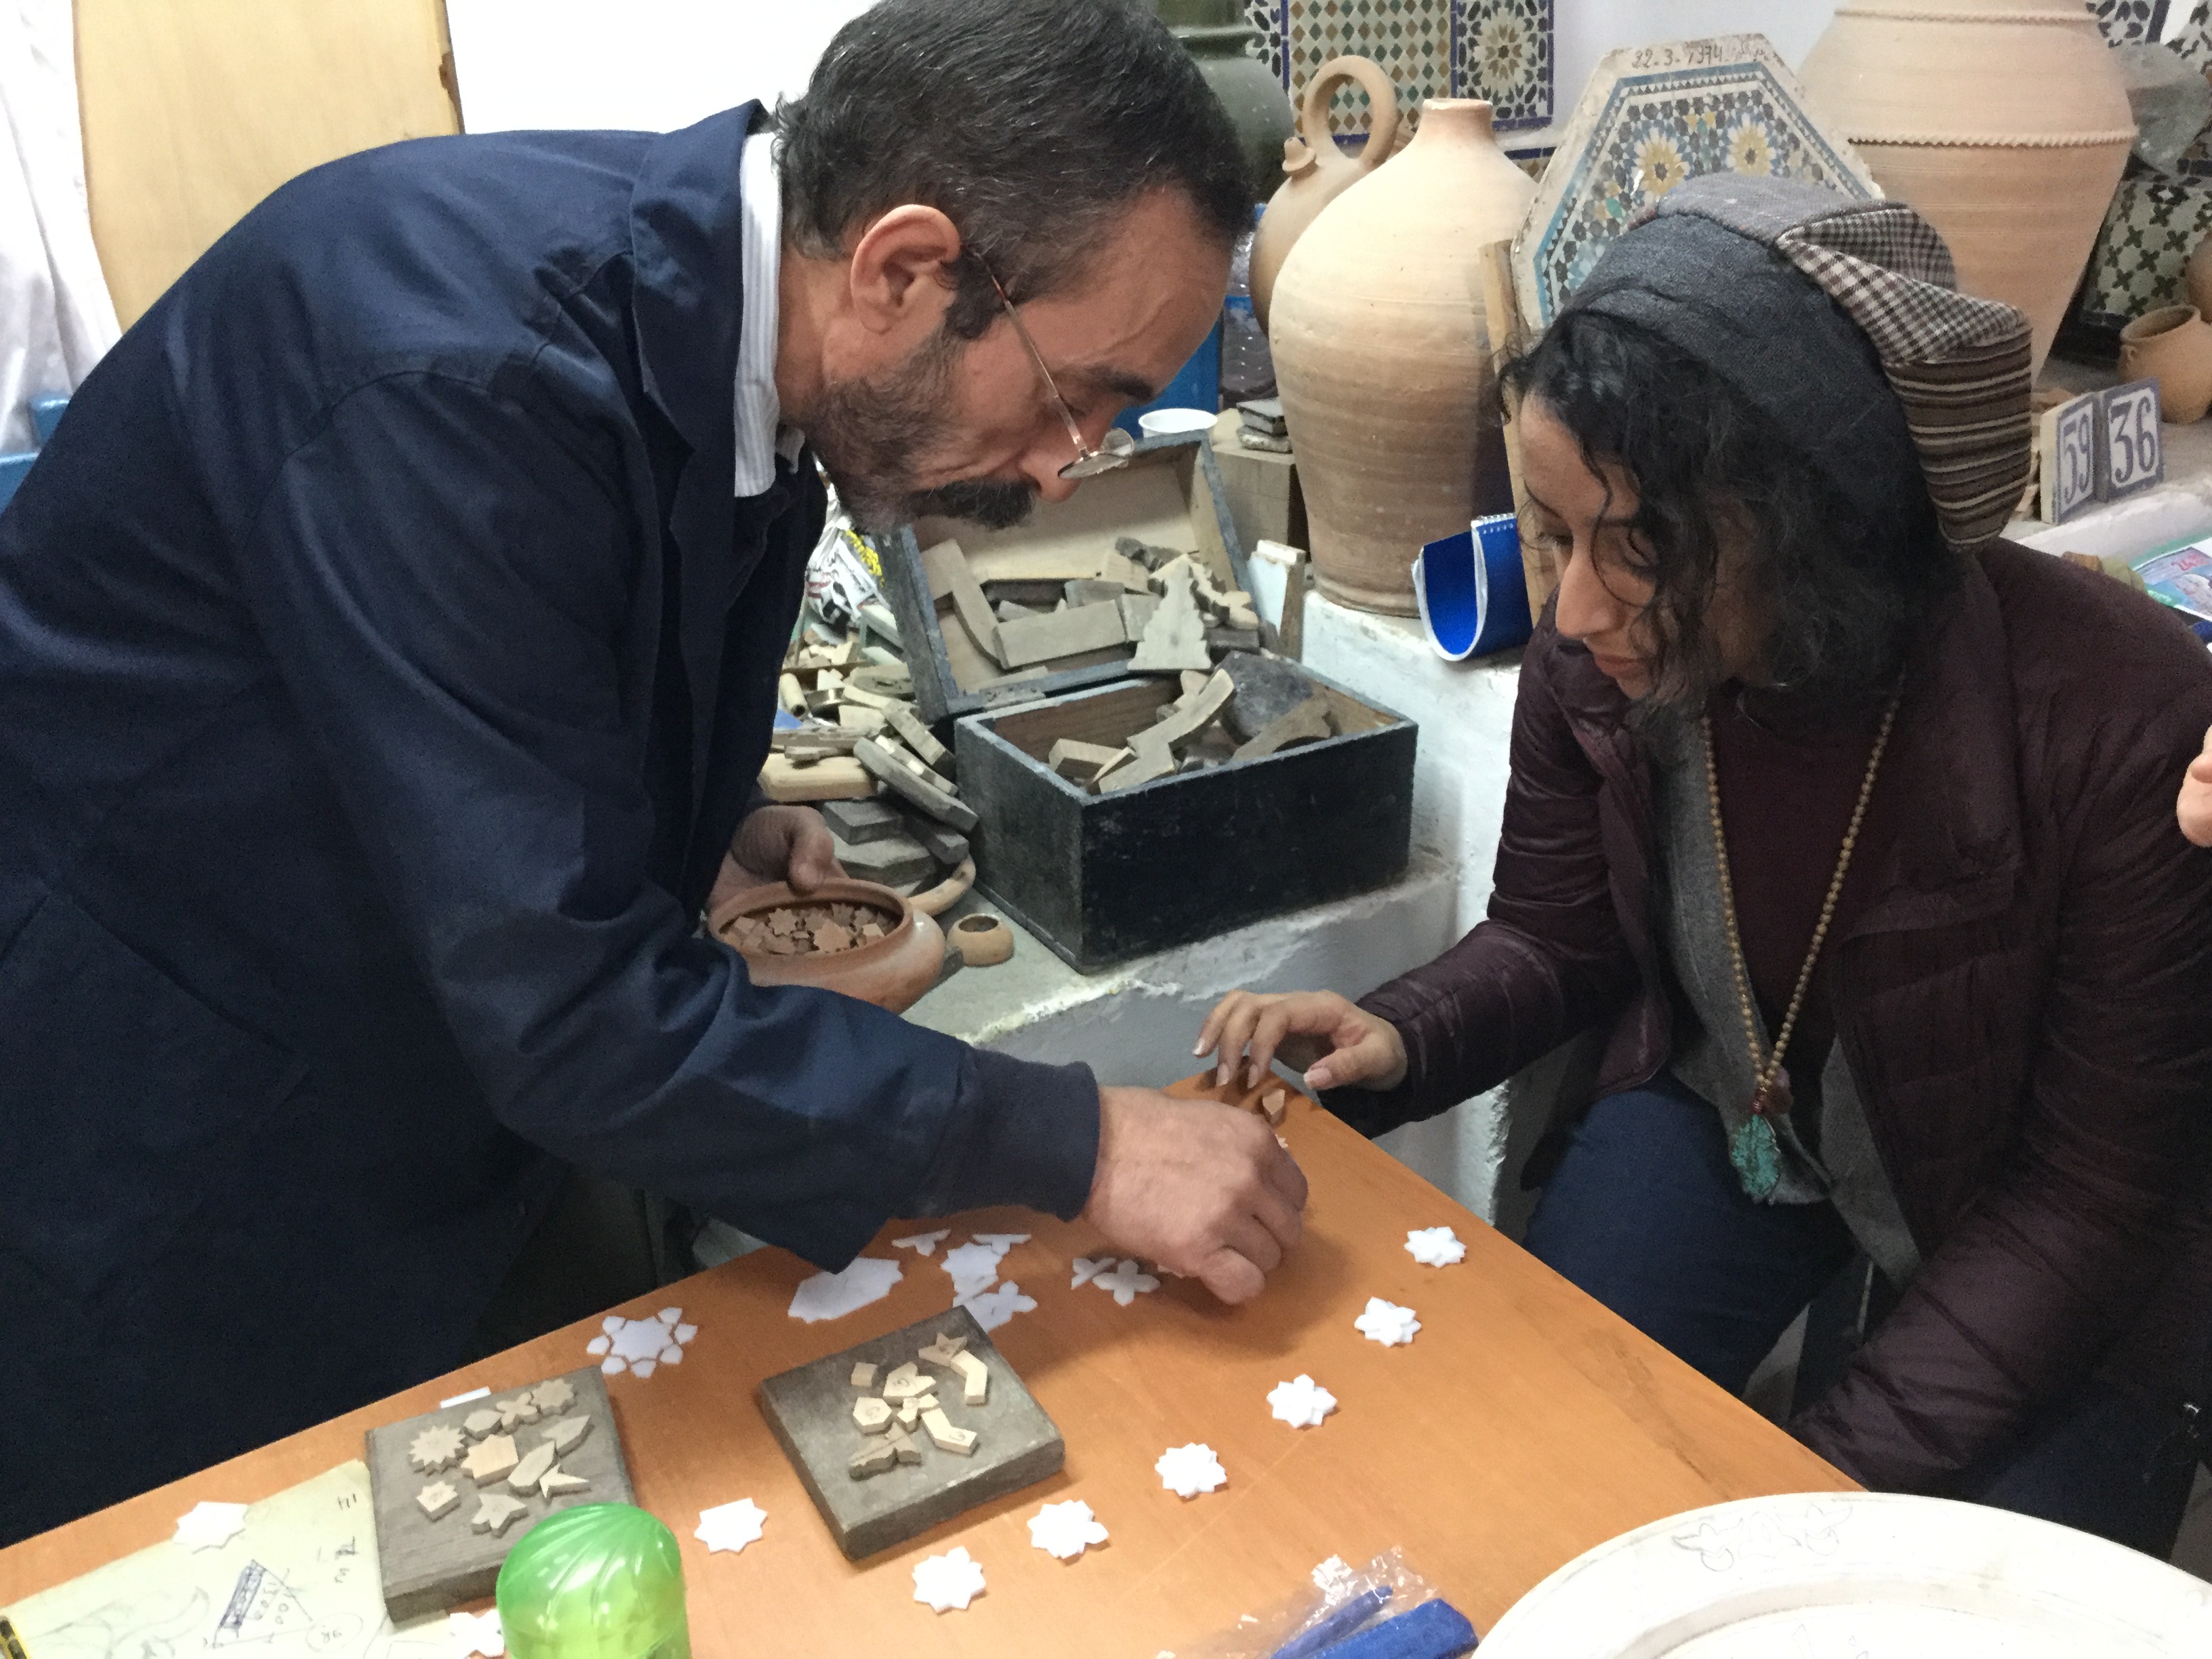 Tamadher Al Fahal with Ali, master tile artisan